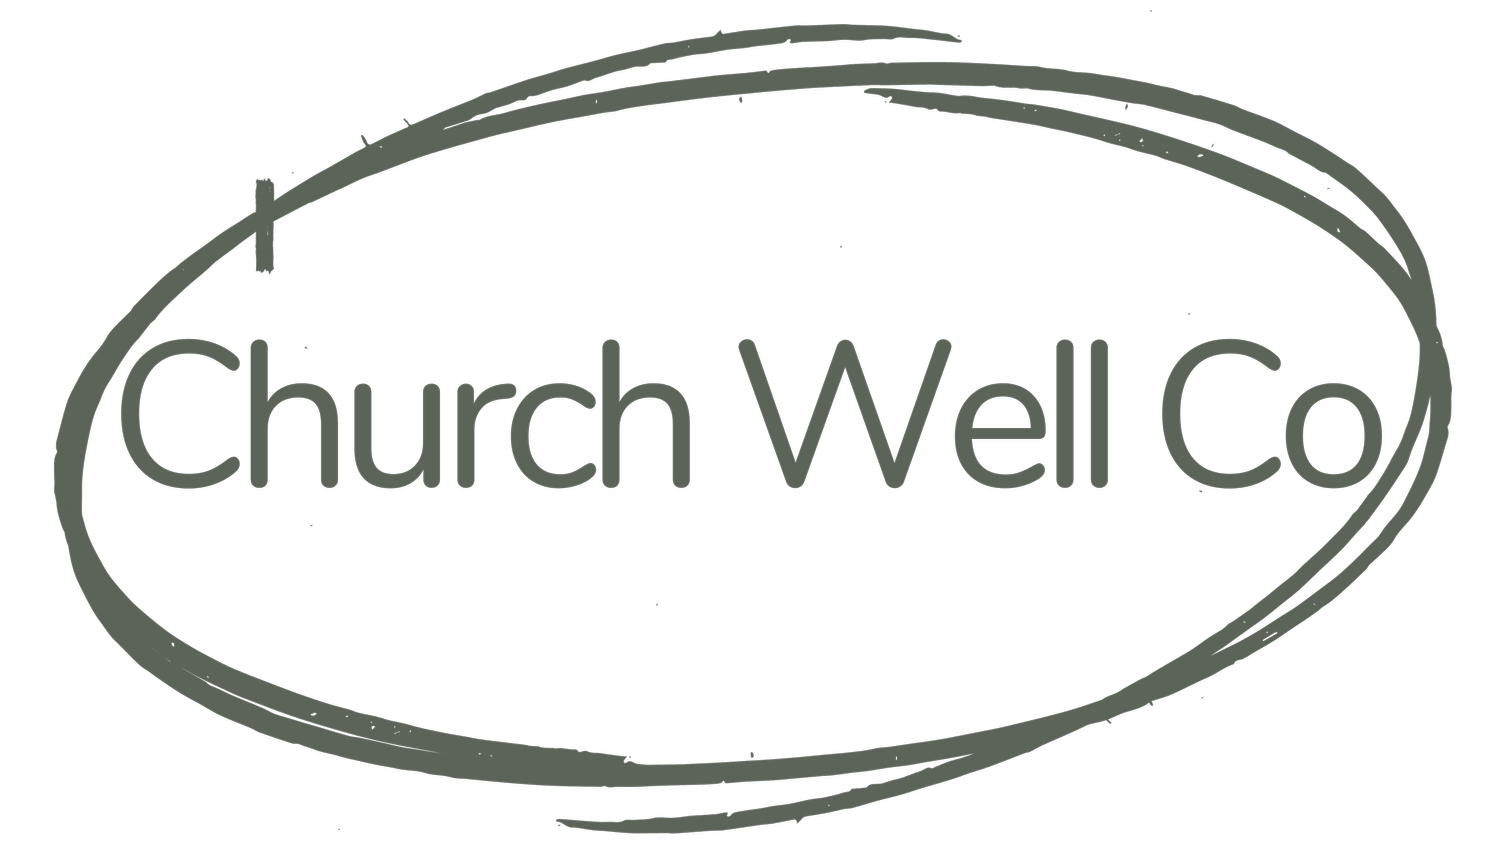 Church Well Co